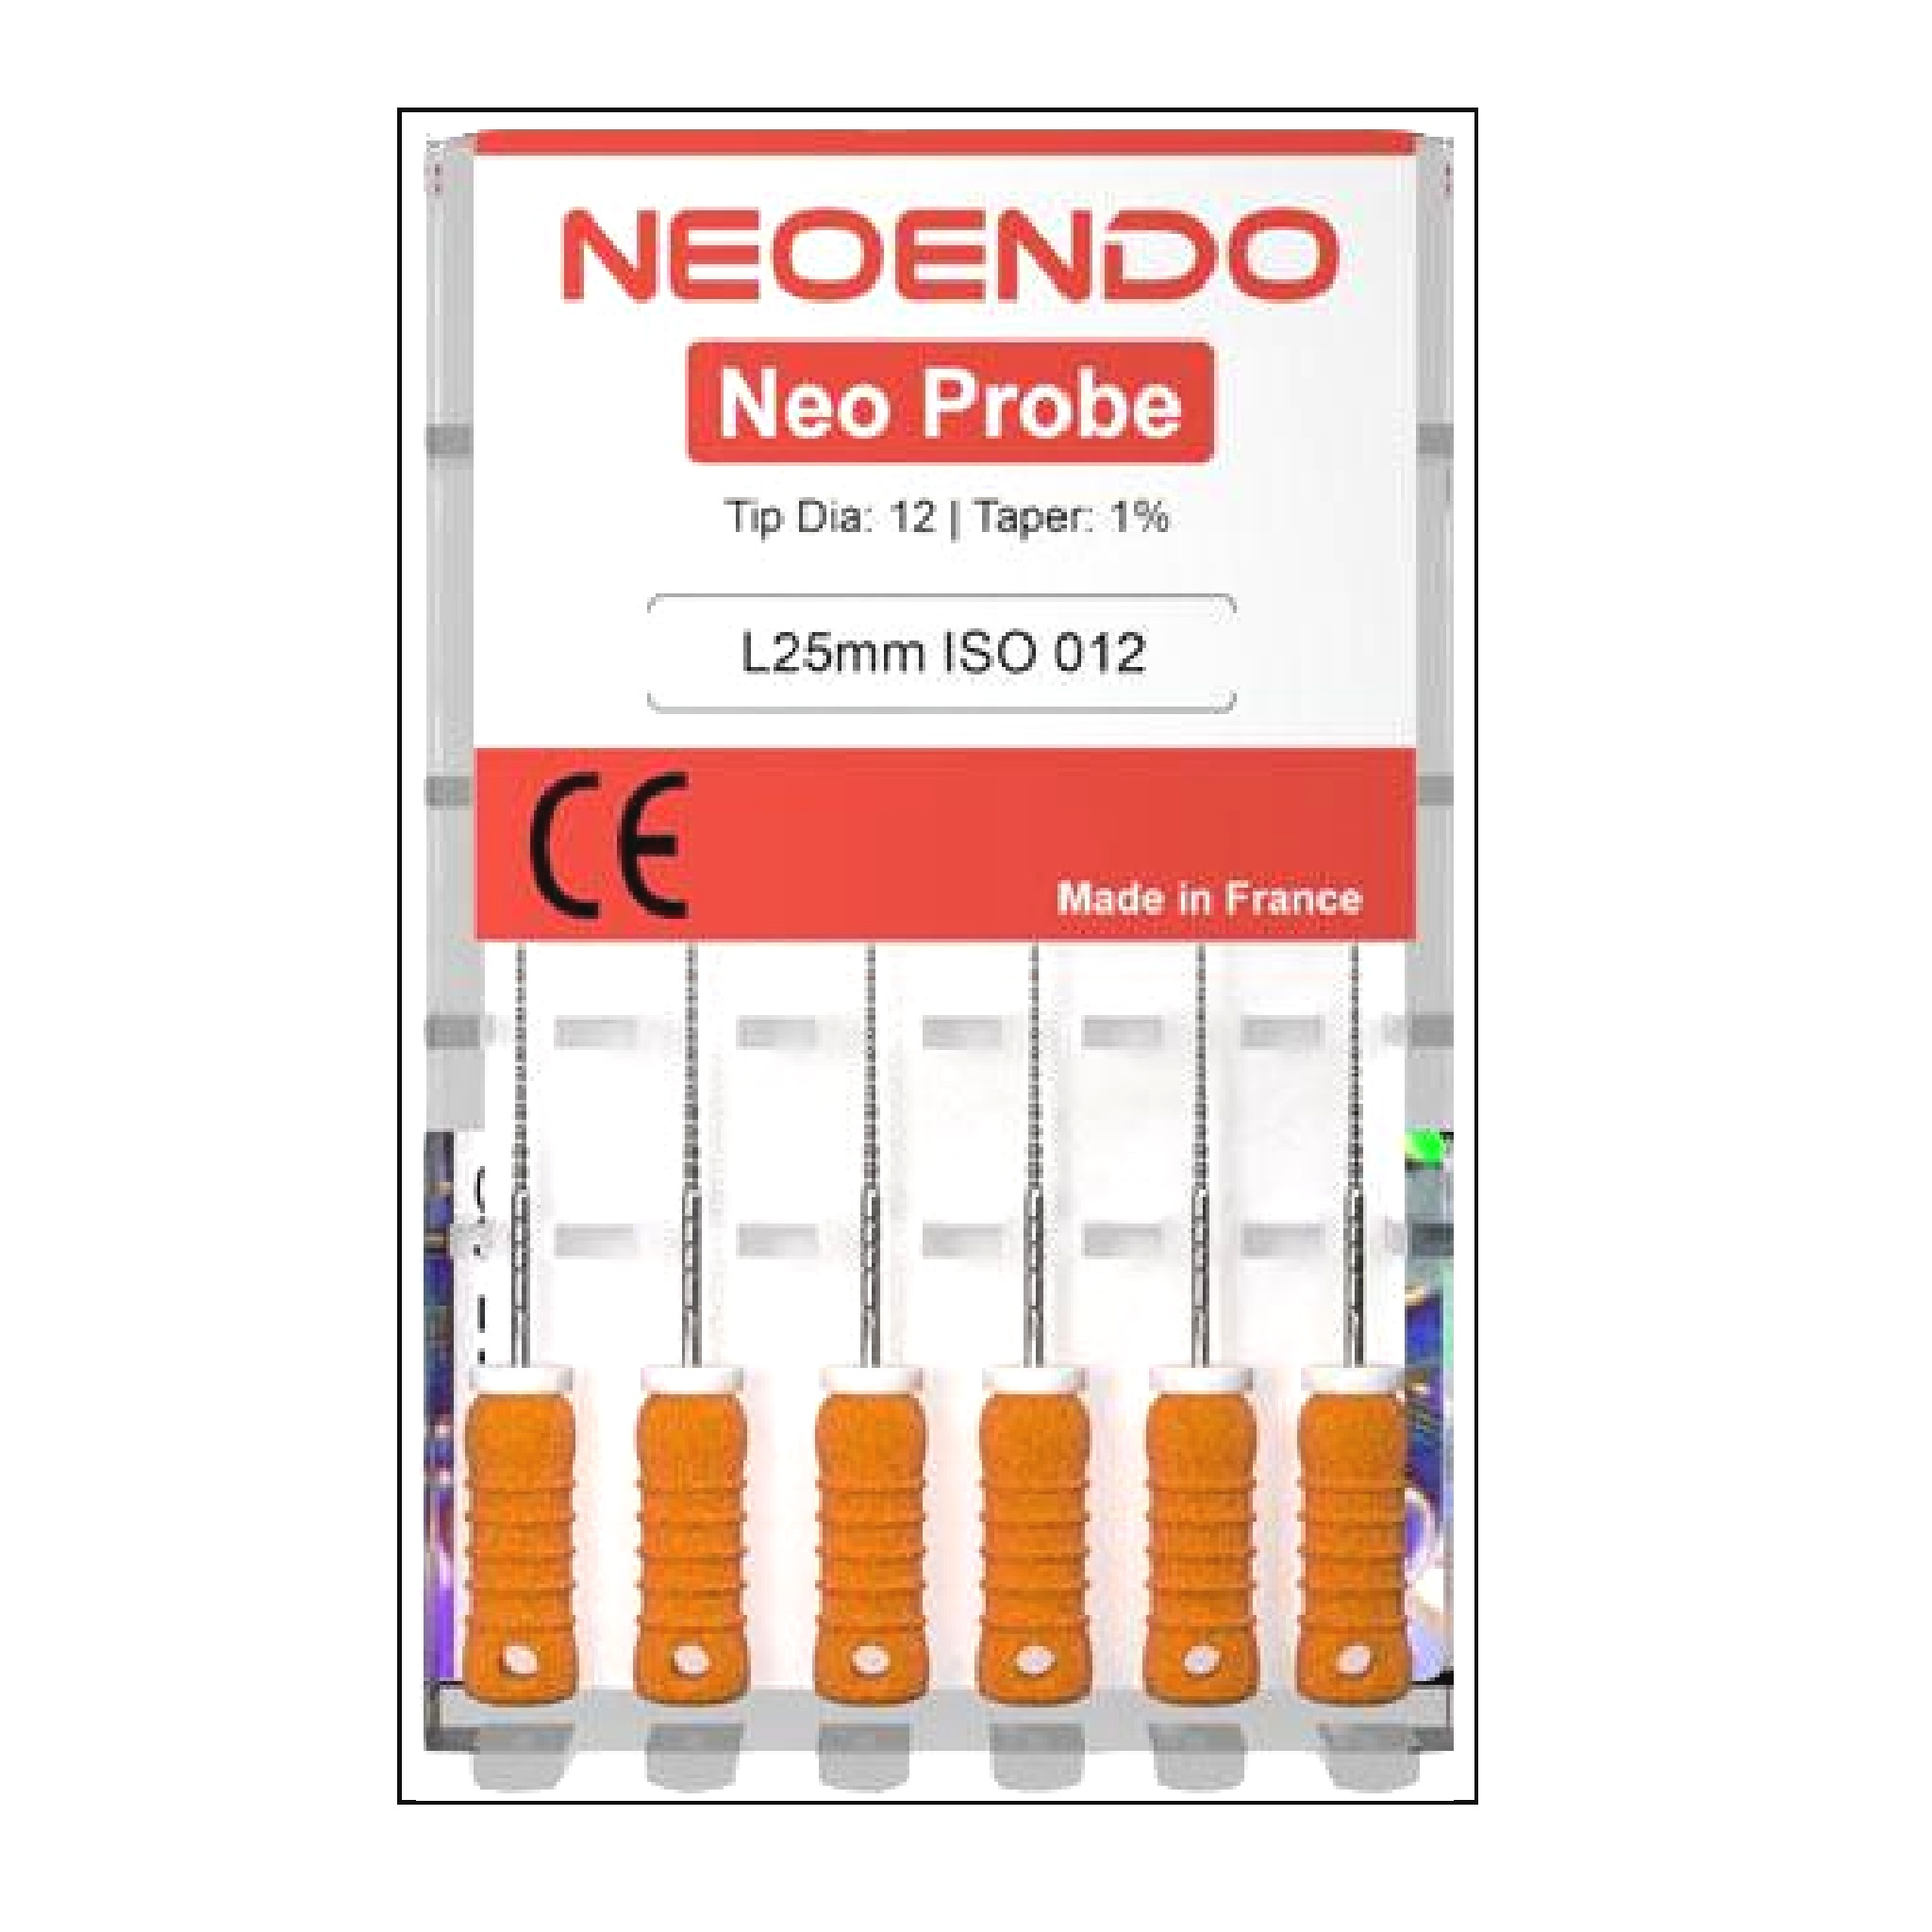 Orikam NeoEndo NeoProbe Dental Endodontic Hand Files Pack Of 6 (25mm)